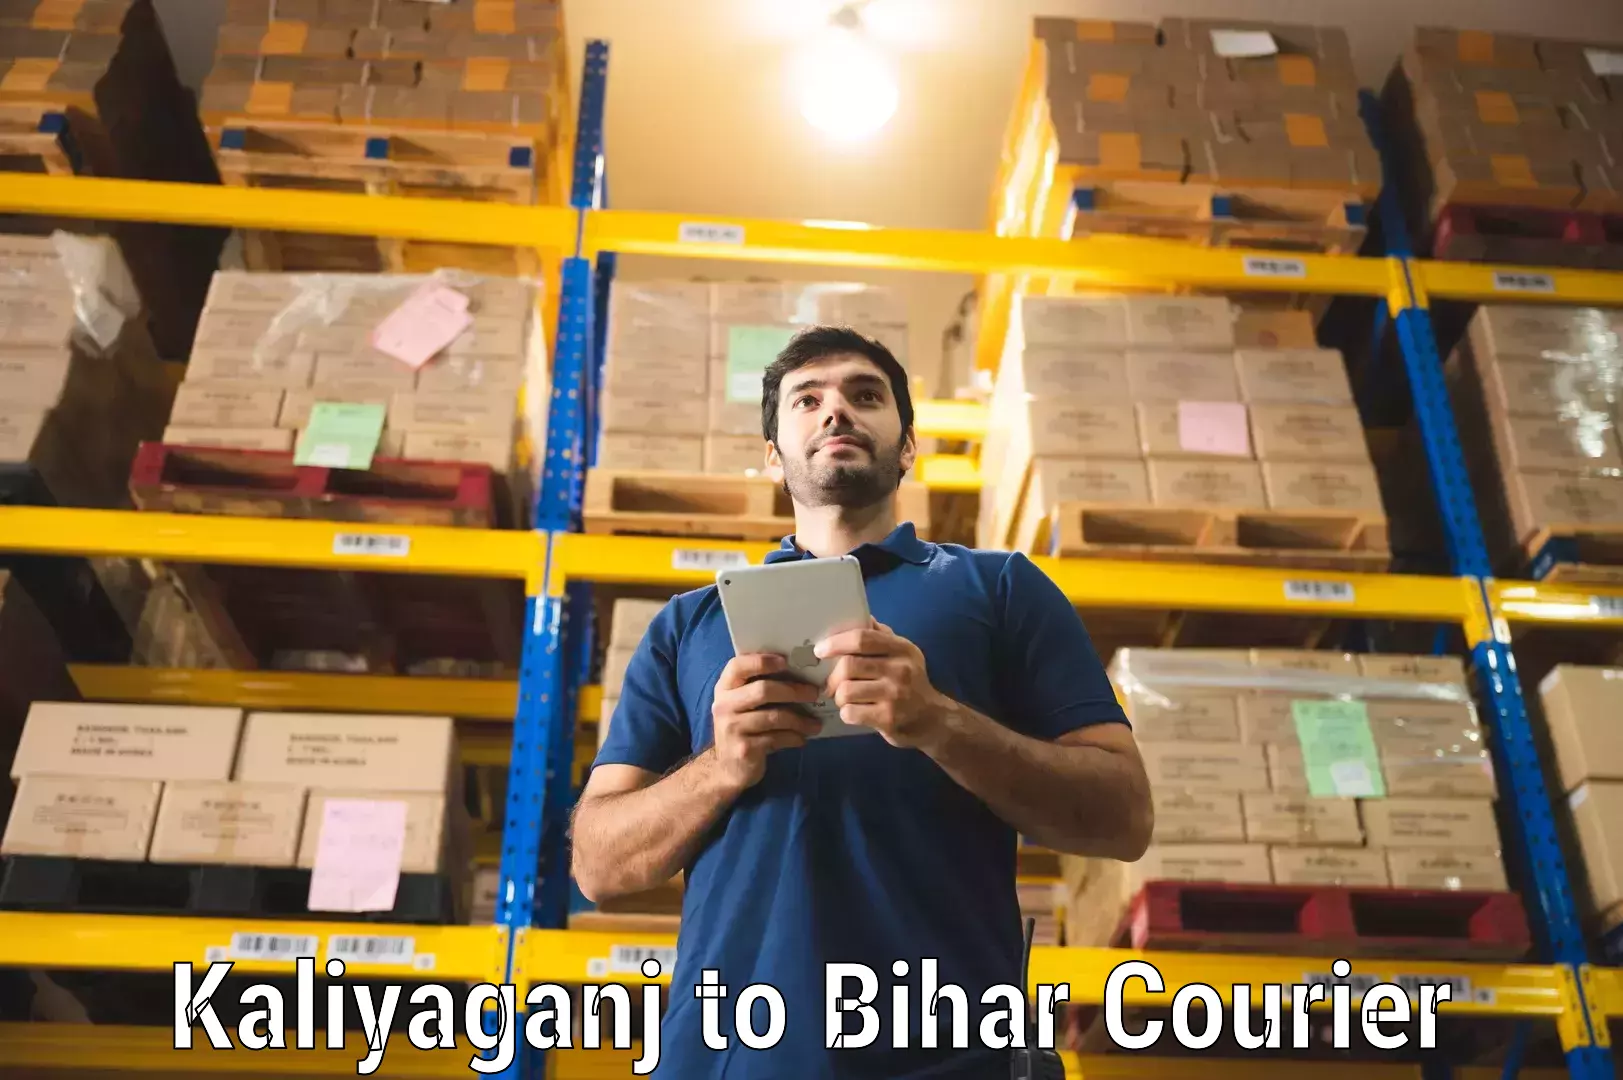 Reliable courier service in Kaliyaganj to Baniapur